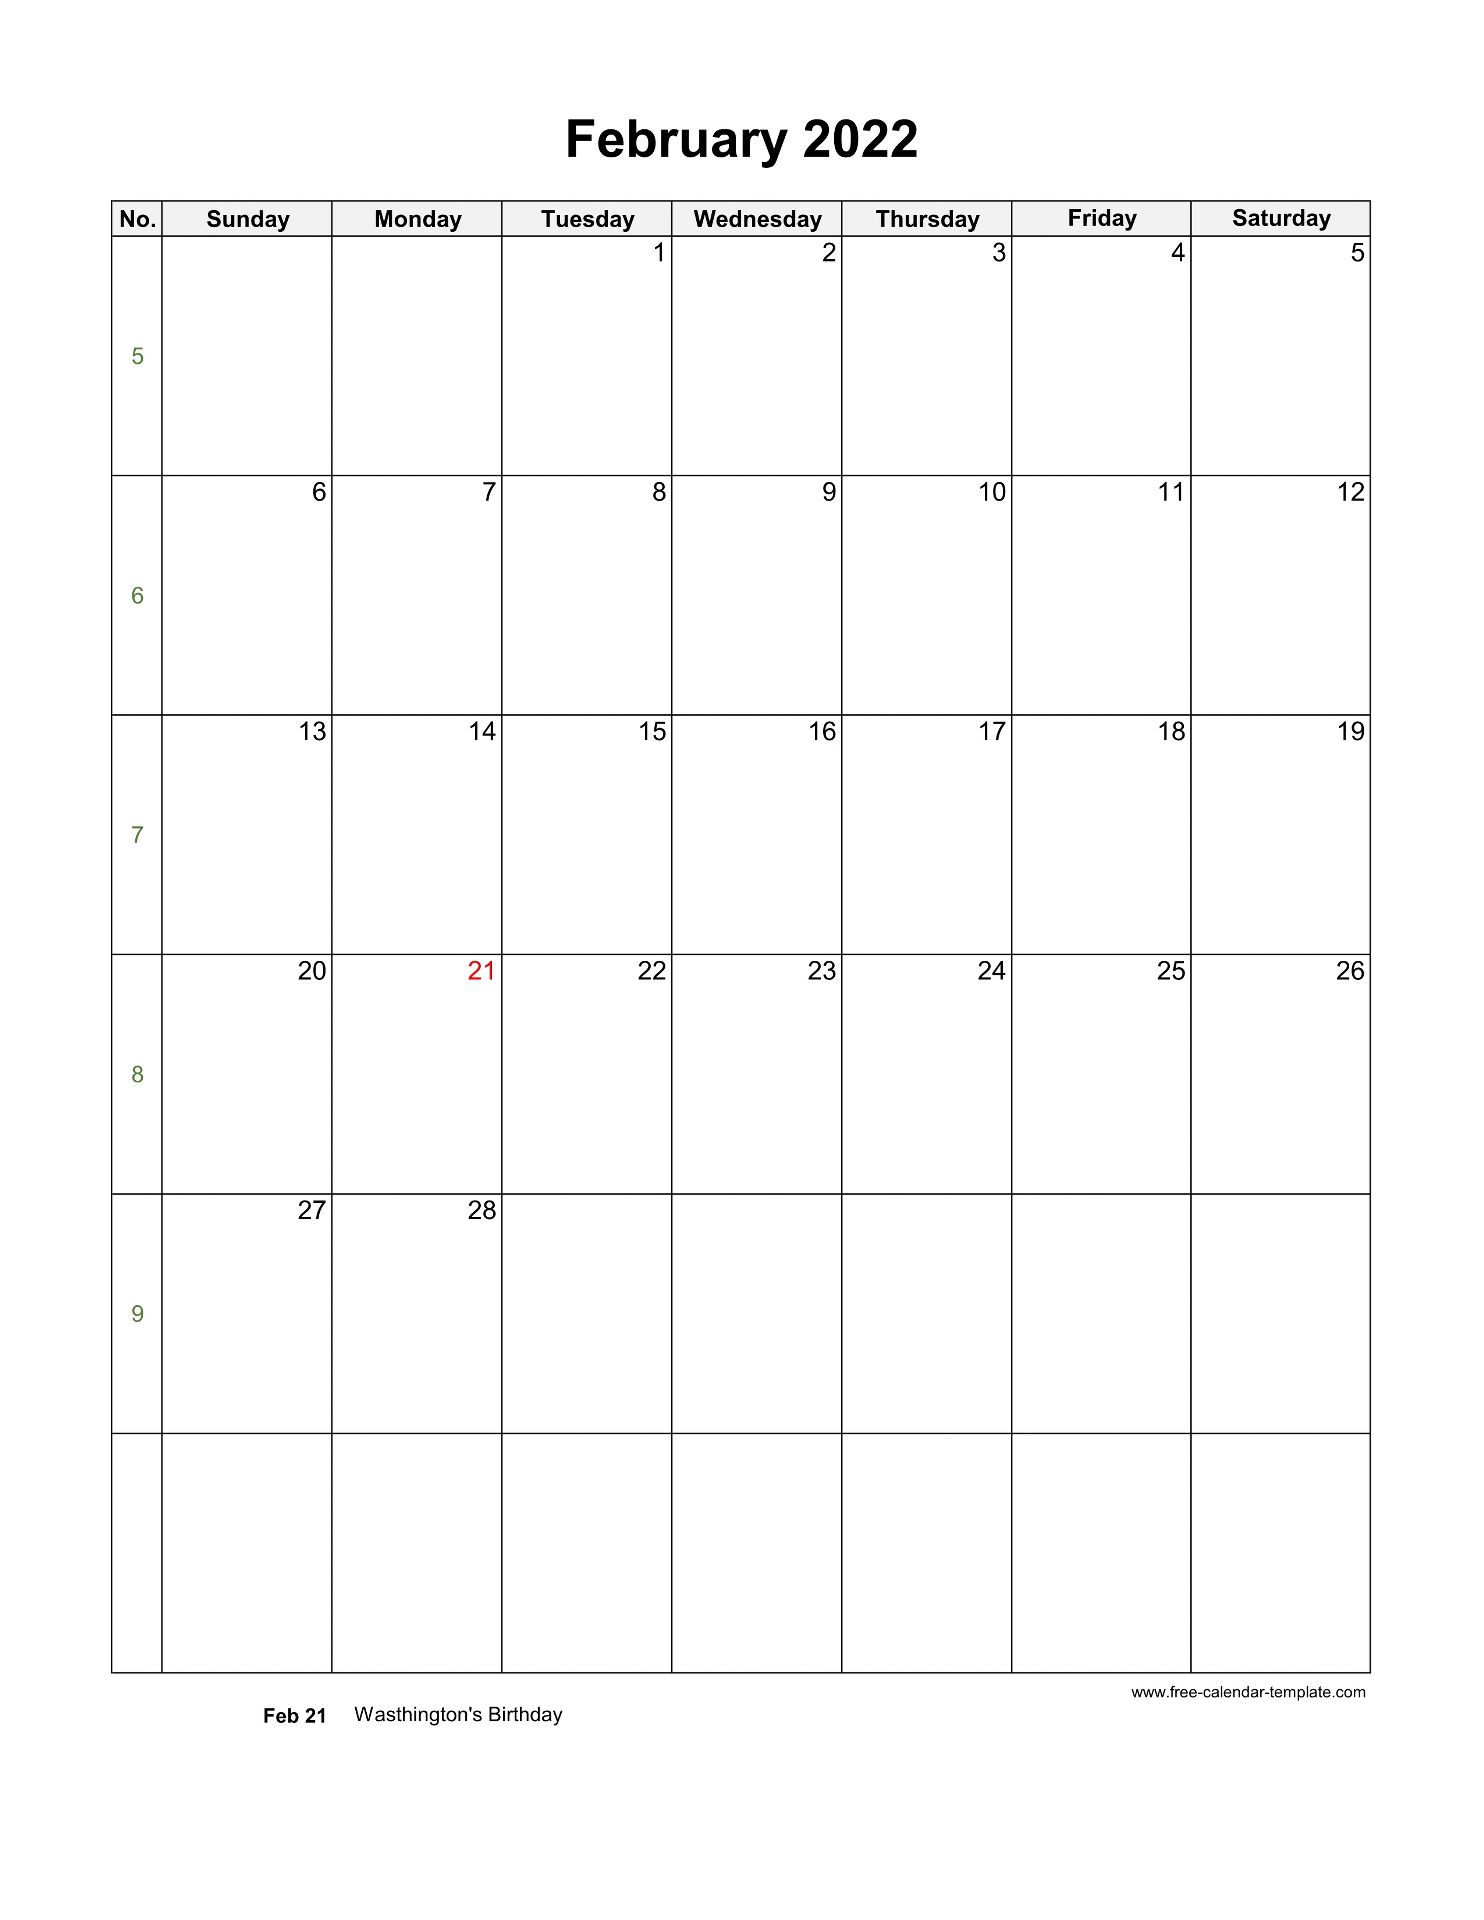 February 2022 Calendar Vertical 2022 February Calendar (Blank Vertical Template) | Free-Calendar-Template .Com